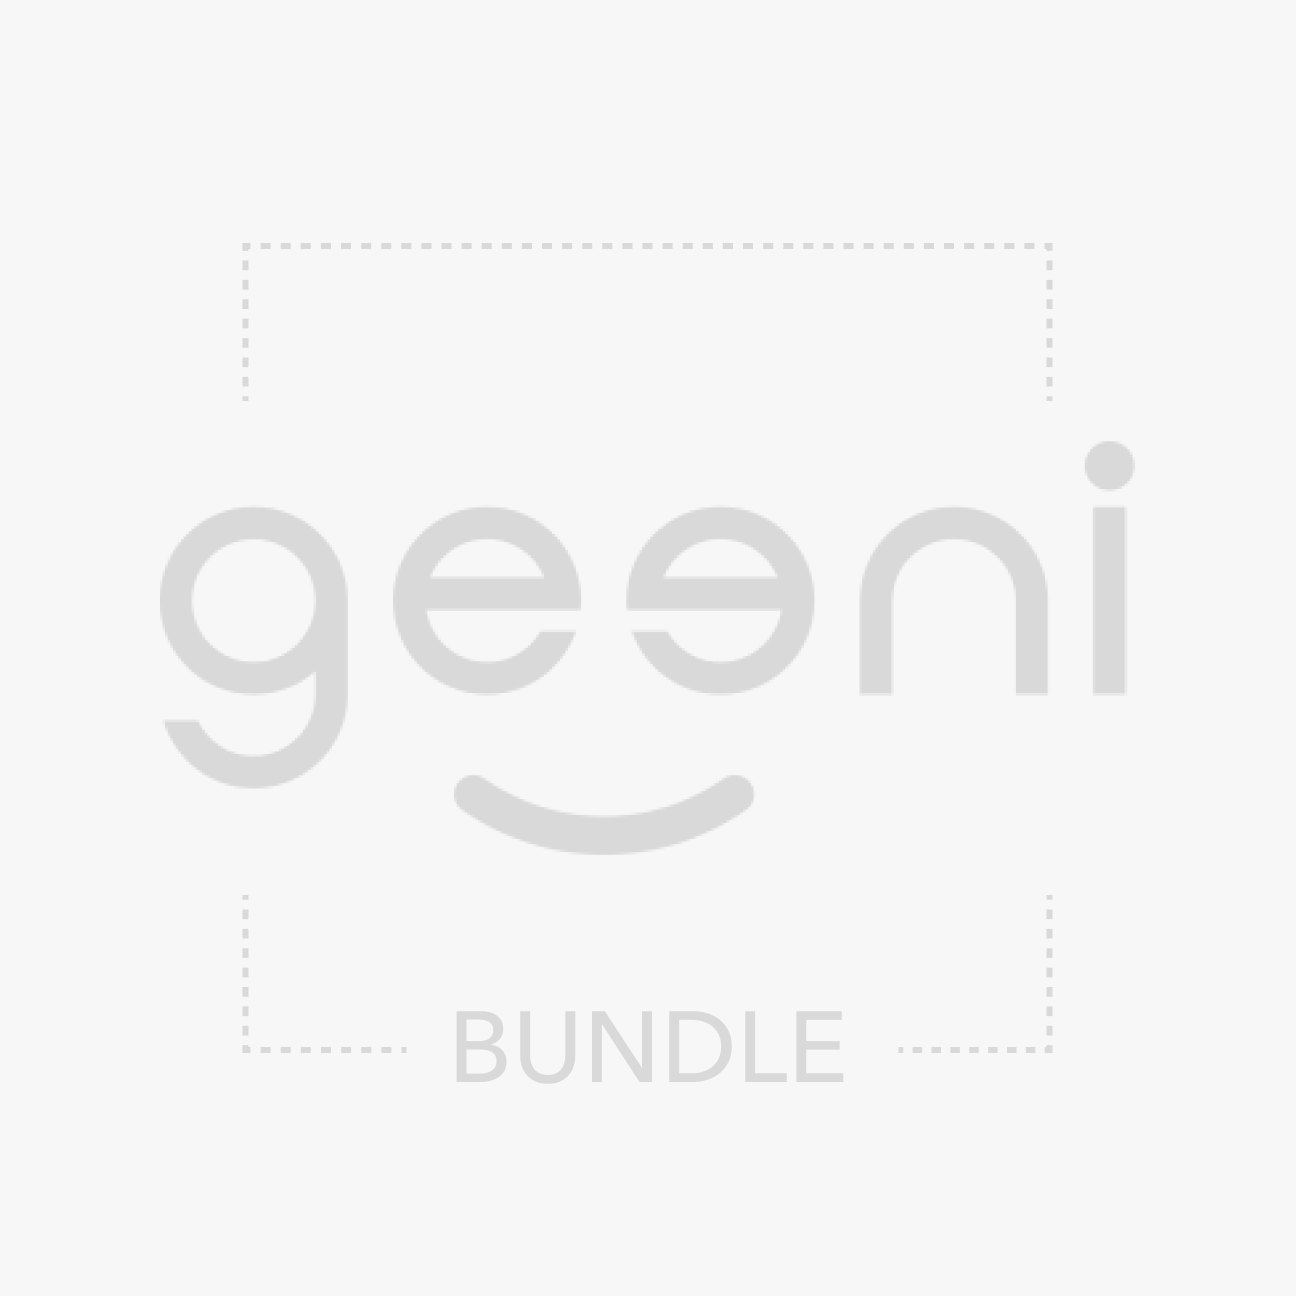 Geeni Temperature and Humidity Sensor (2-Pack) – Geeni Smarthome